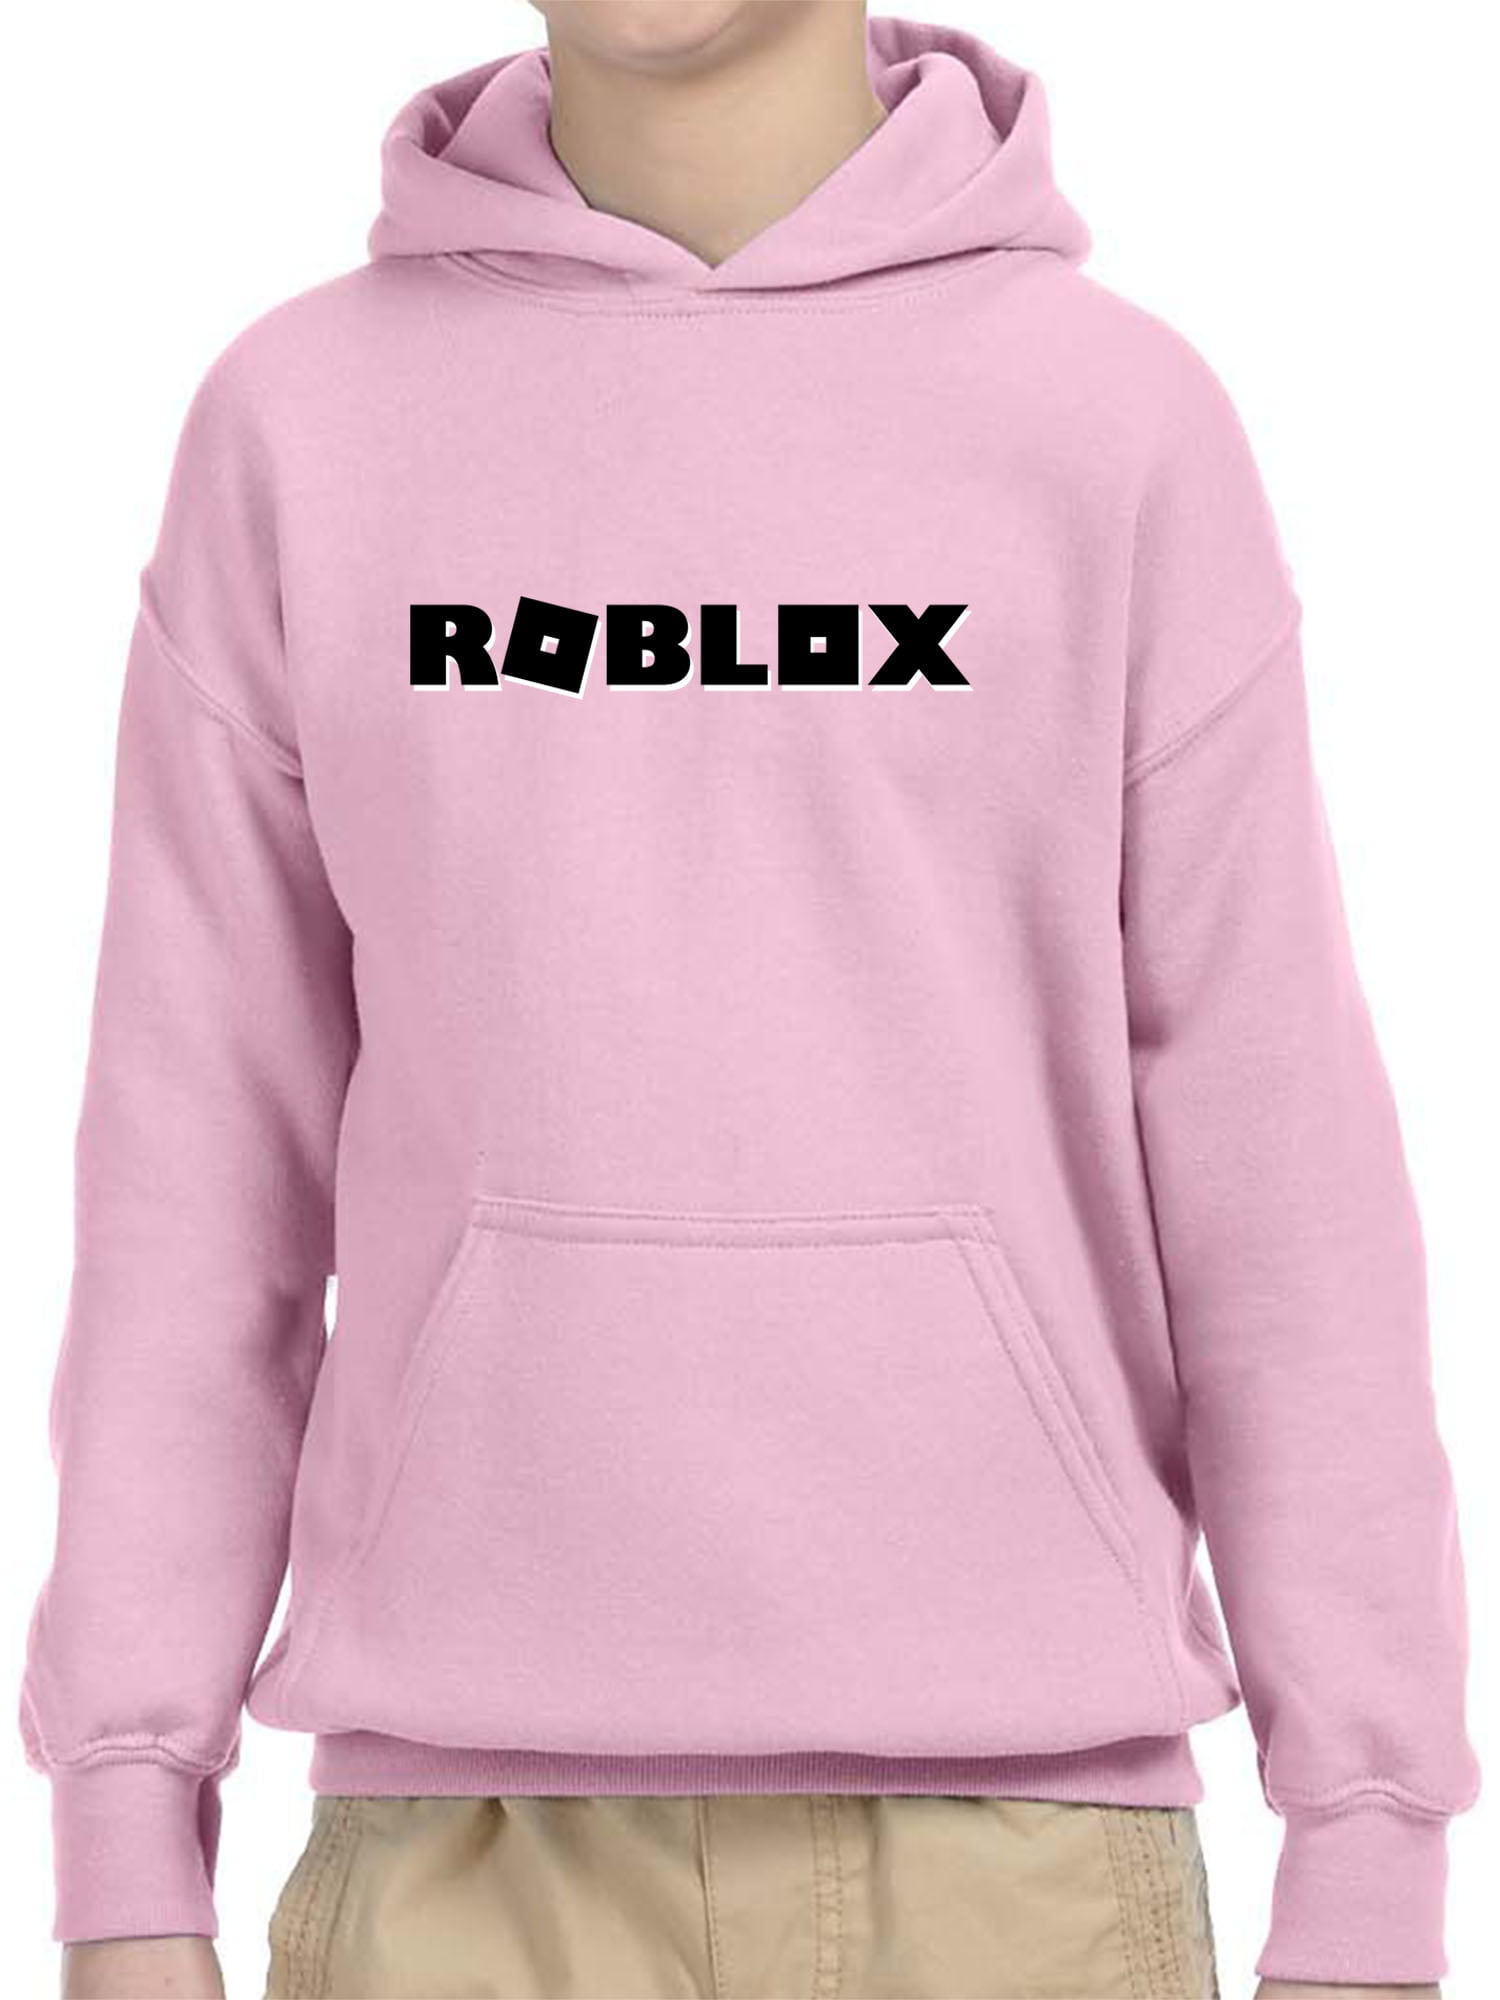 New Way New Way 1168 Youth Hoodie Roblox Block Logo Game Accent Unisex Pullover Sweatshirt Medium Light Pink Walmart Com Walmart Com - error hoodie roblox